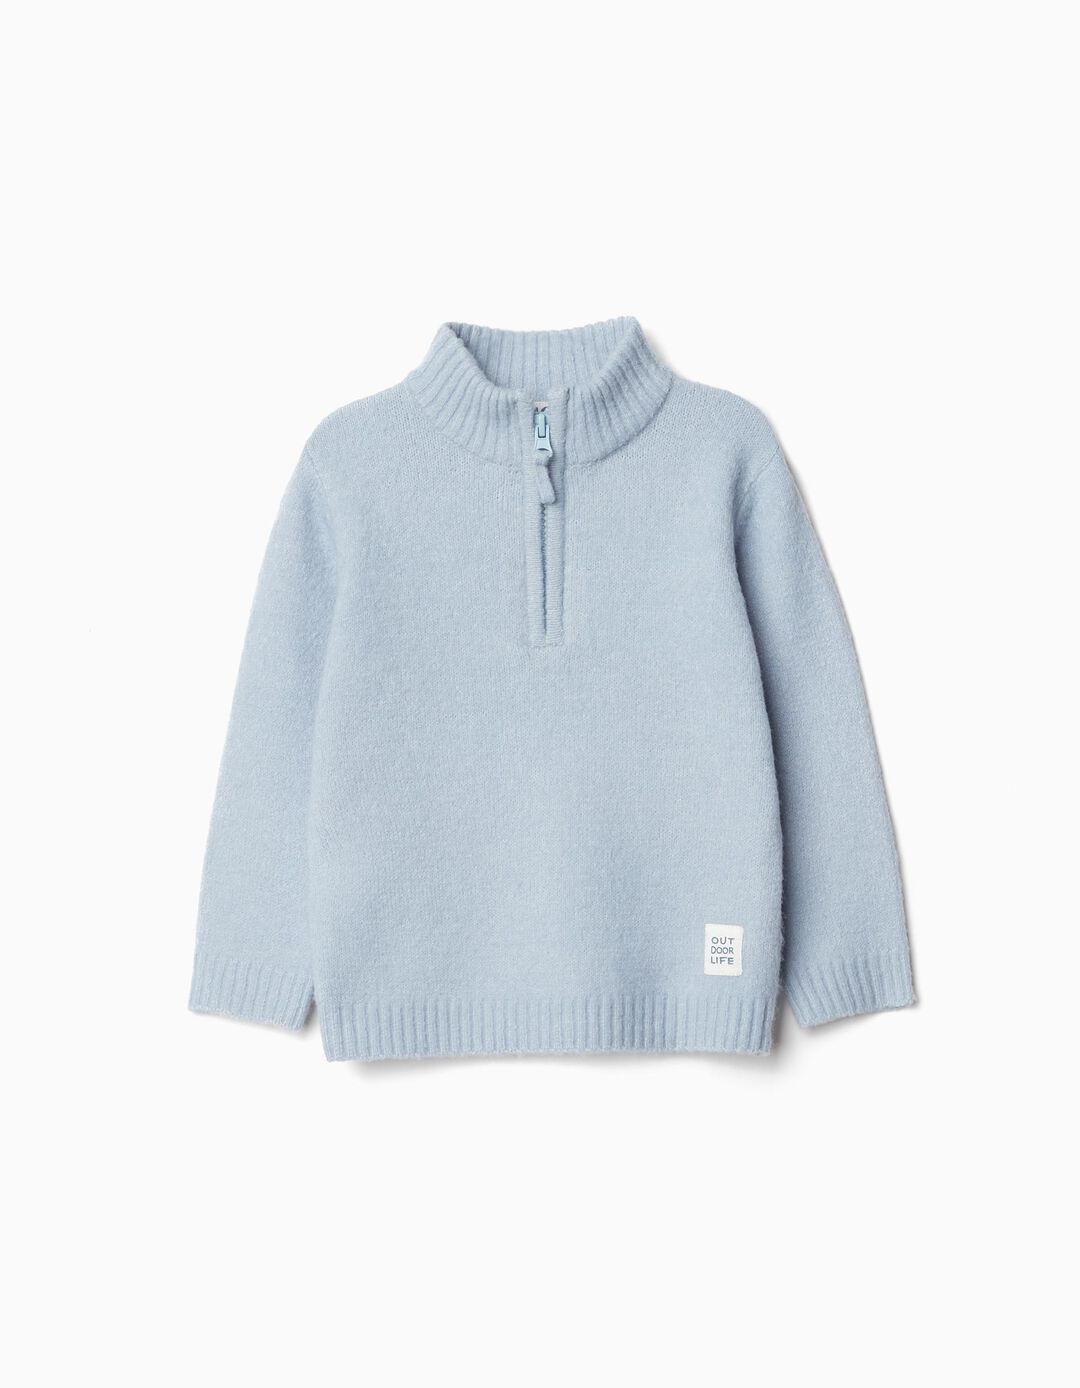 Zip Knit Sweater, Baby Boy, Light Blue